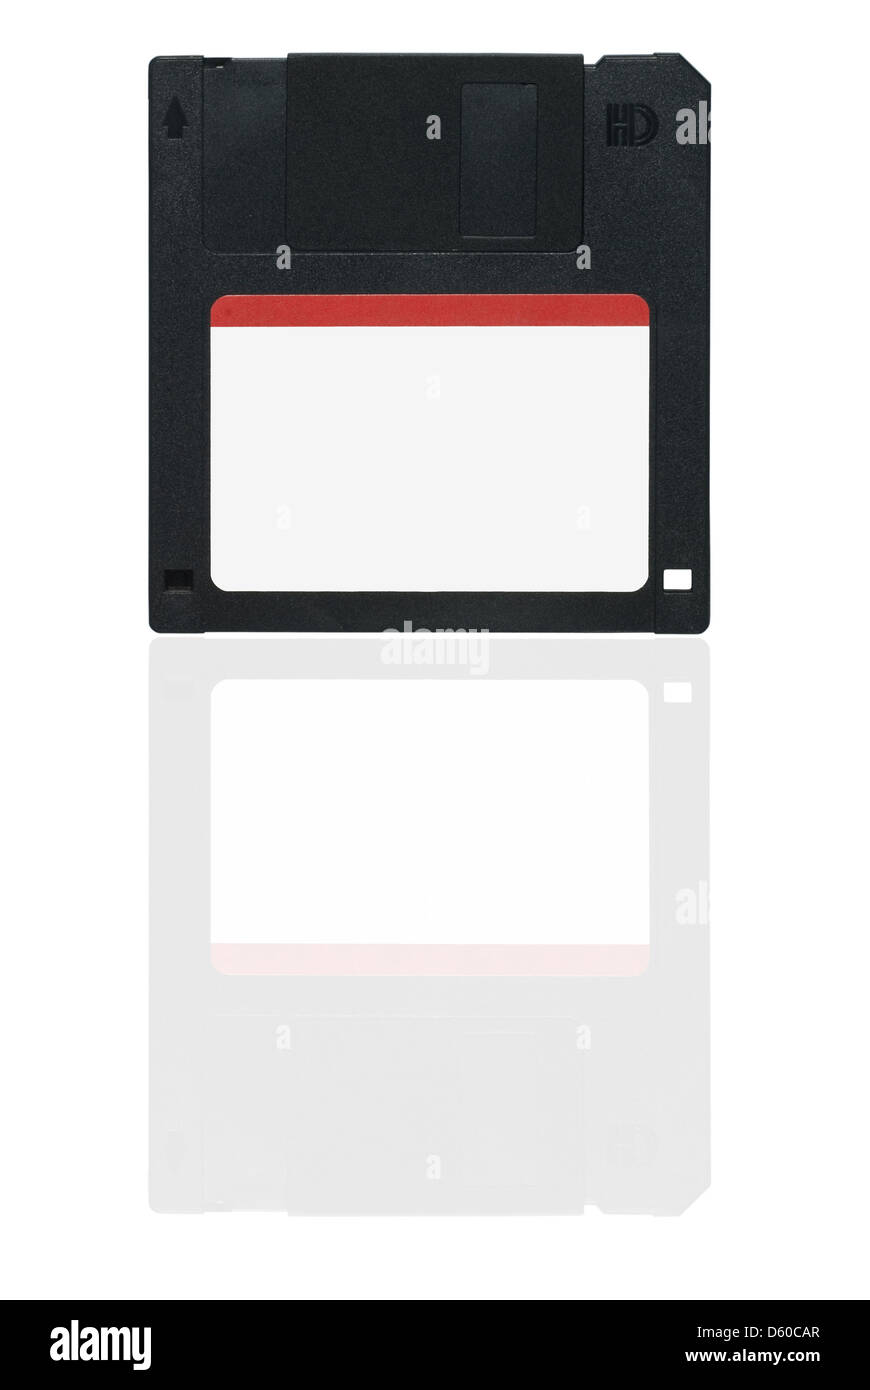 Blank floppy disk on white background Stock Photo